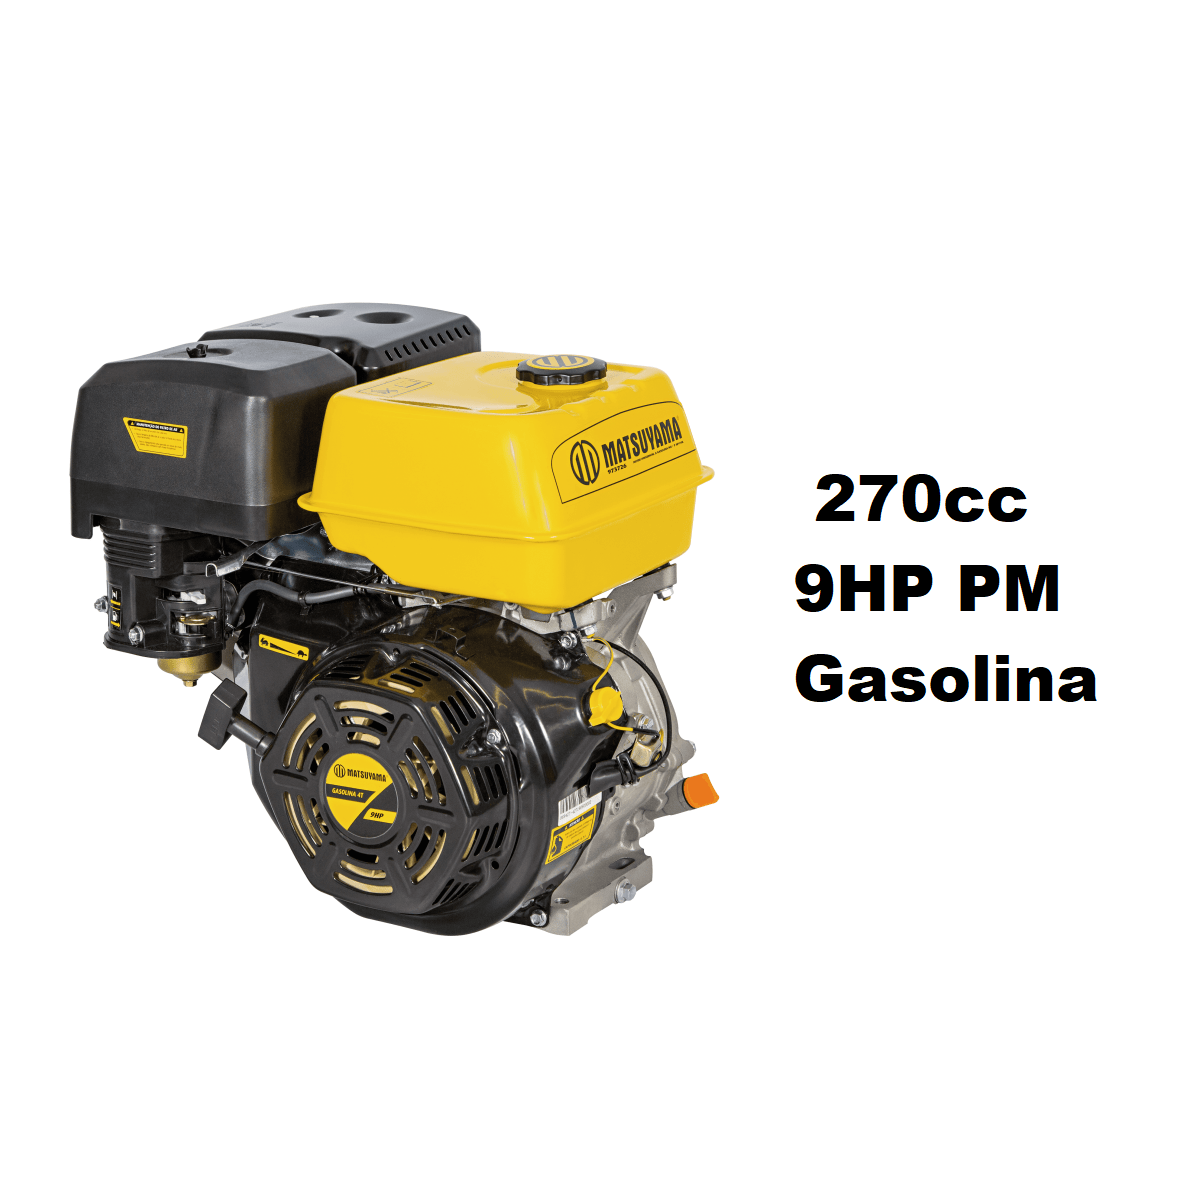 Motor Horizontal 270cc 9HP PM Gasolina Matsuyama